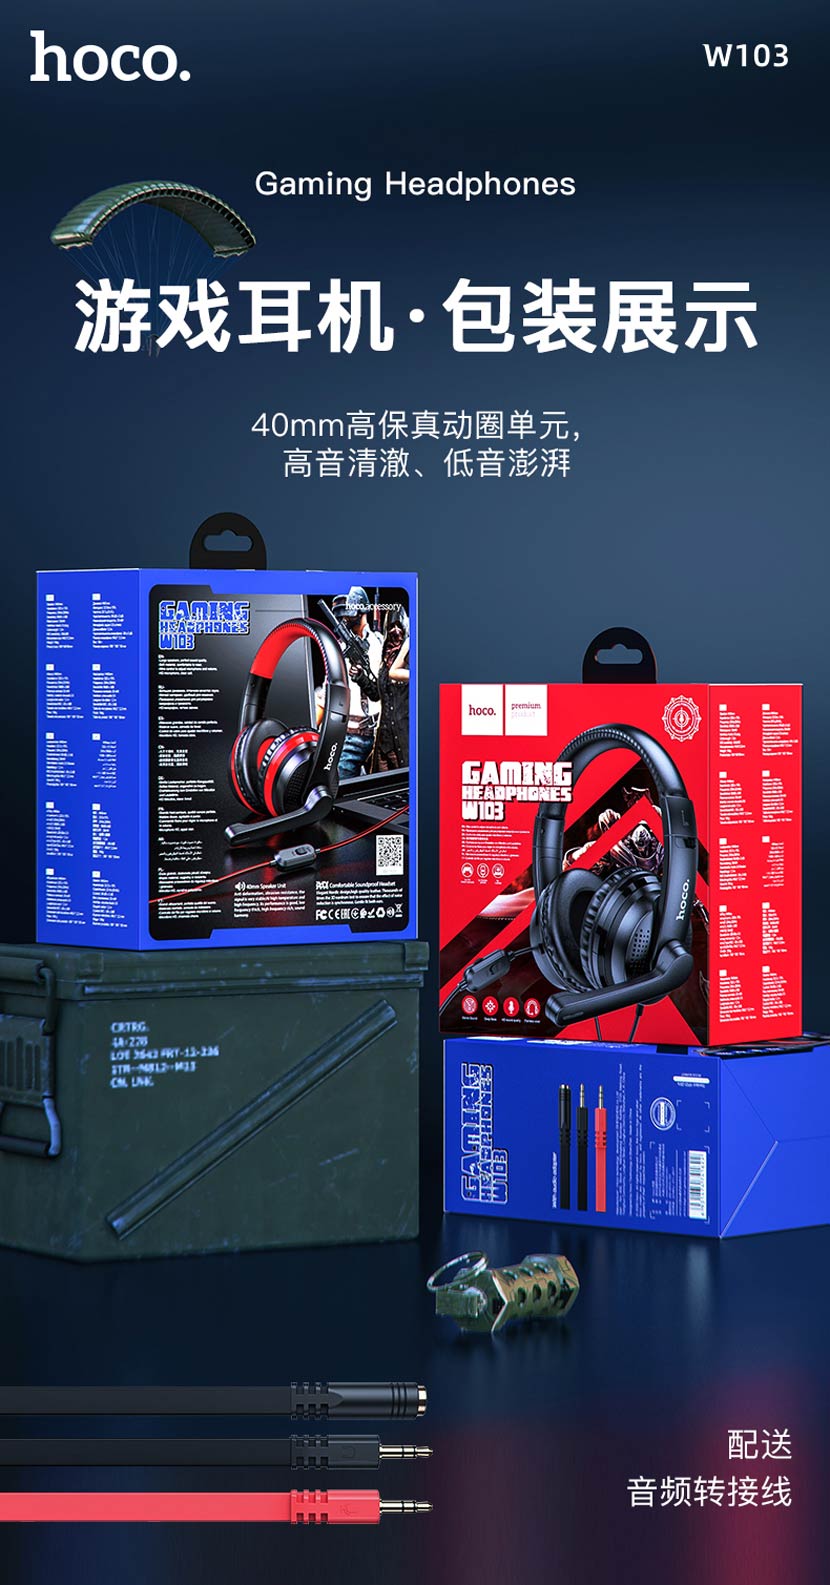 hoco news w103 magic tour gaming headphones package cn